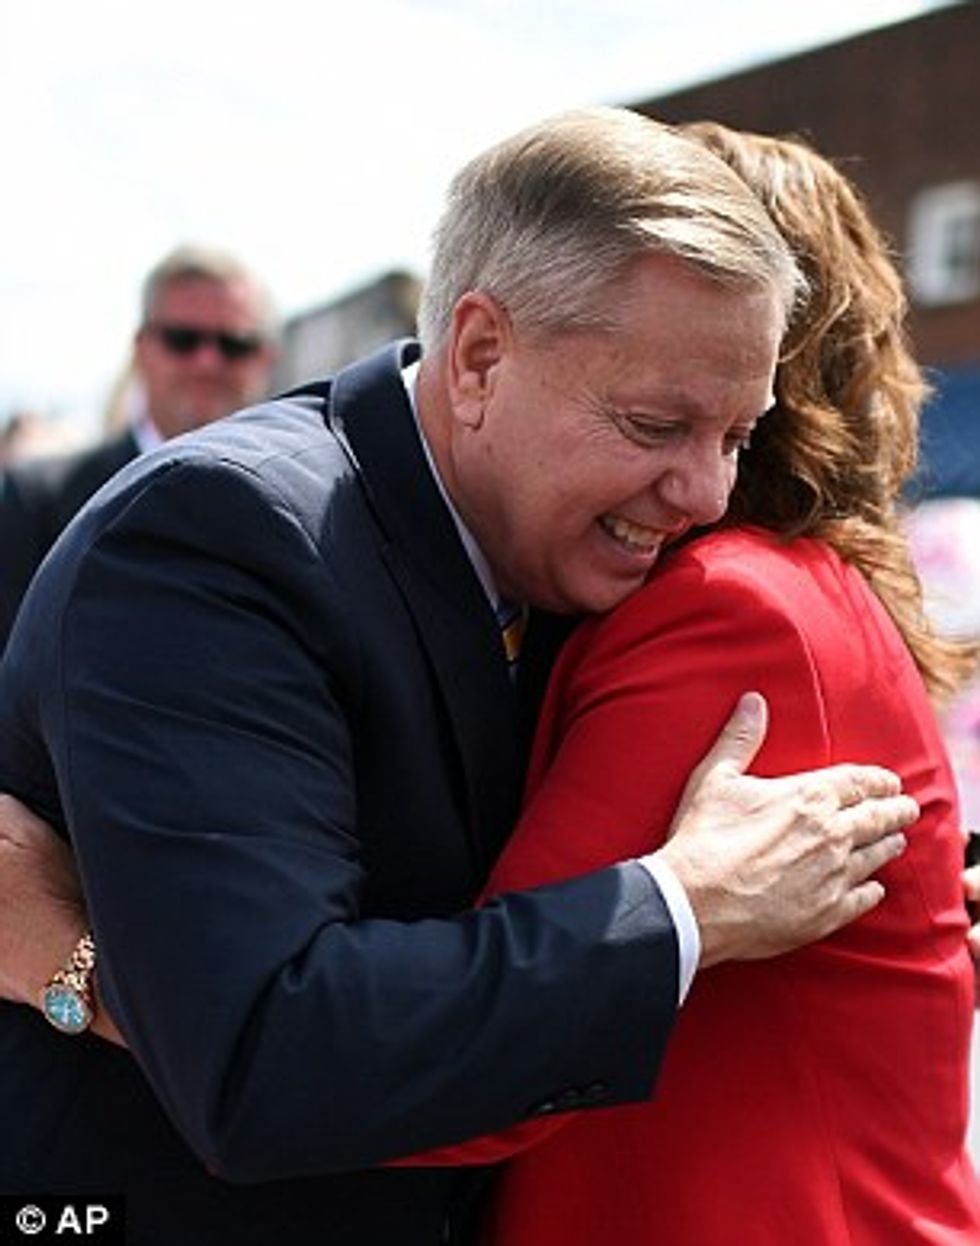 Senator Lindsey Graham hugging a woman